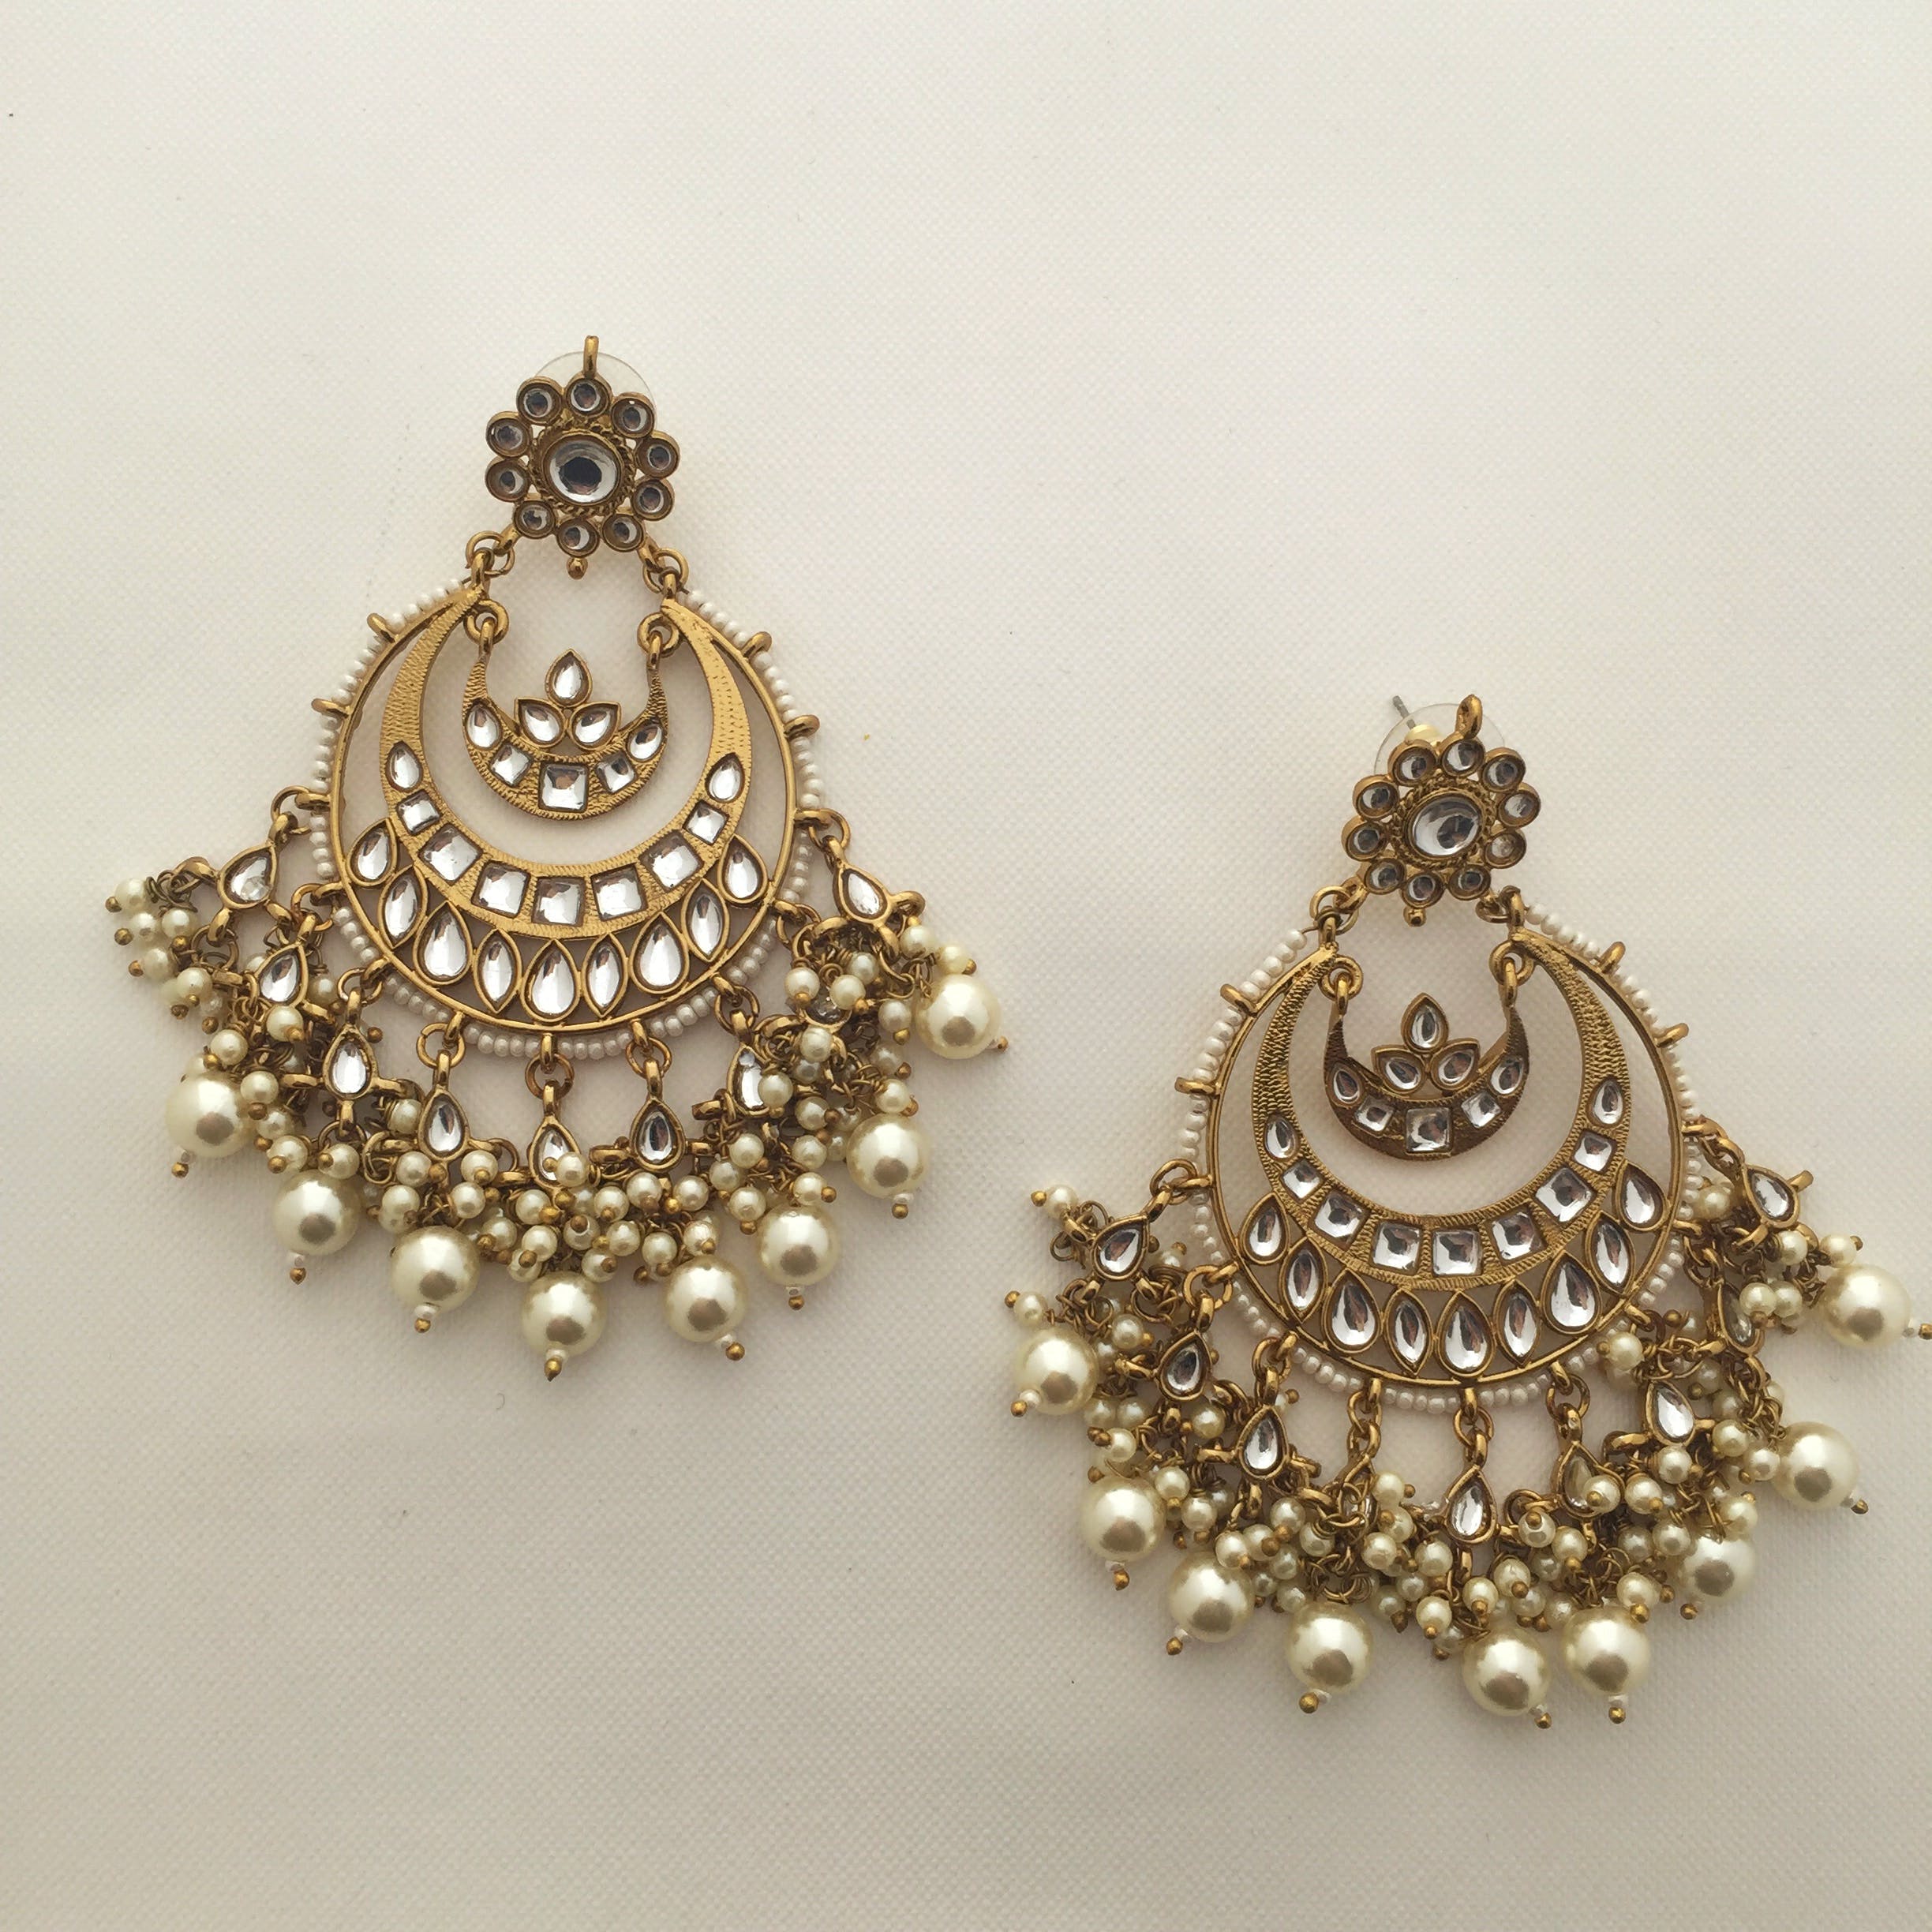 Buy Pearl Golden ChandBali Earrings Online  Get 47 Off